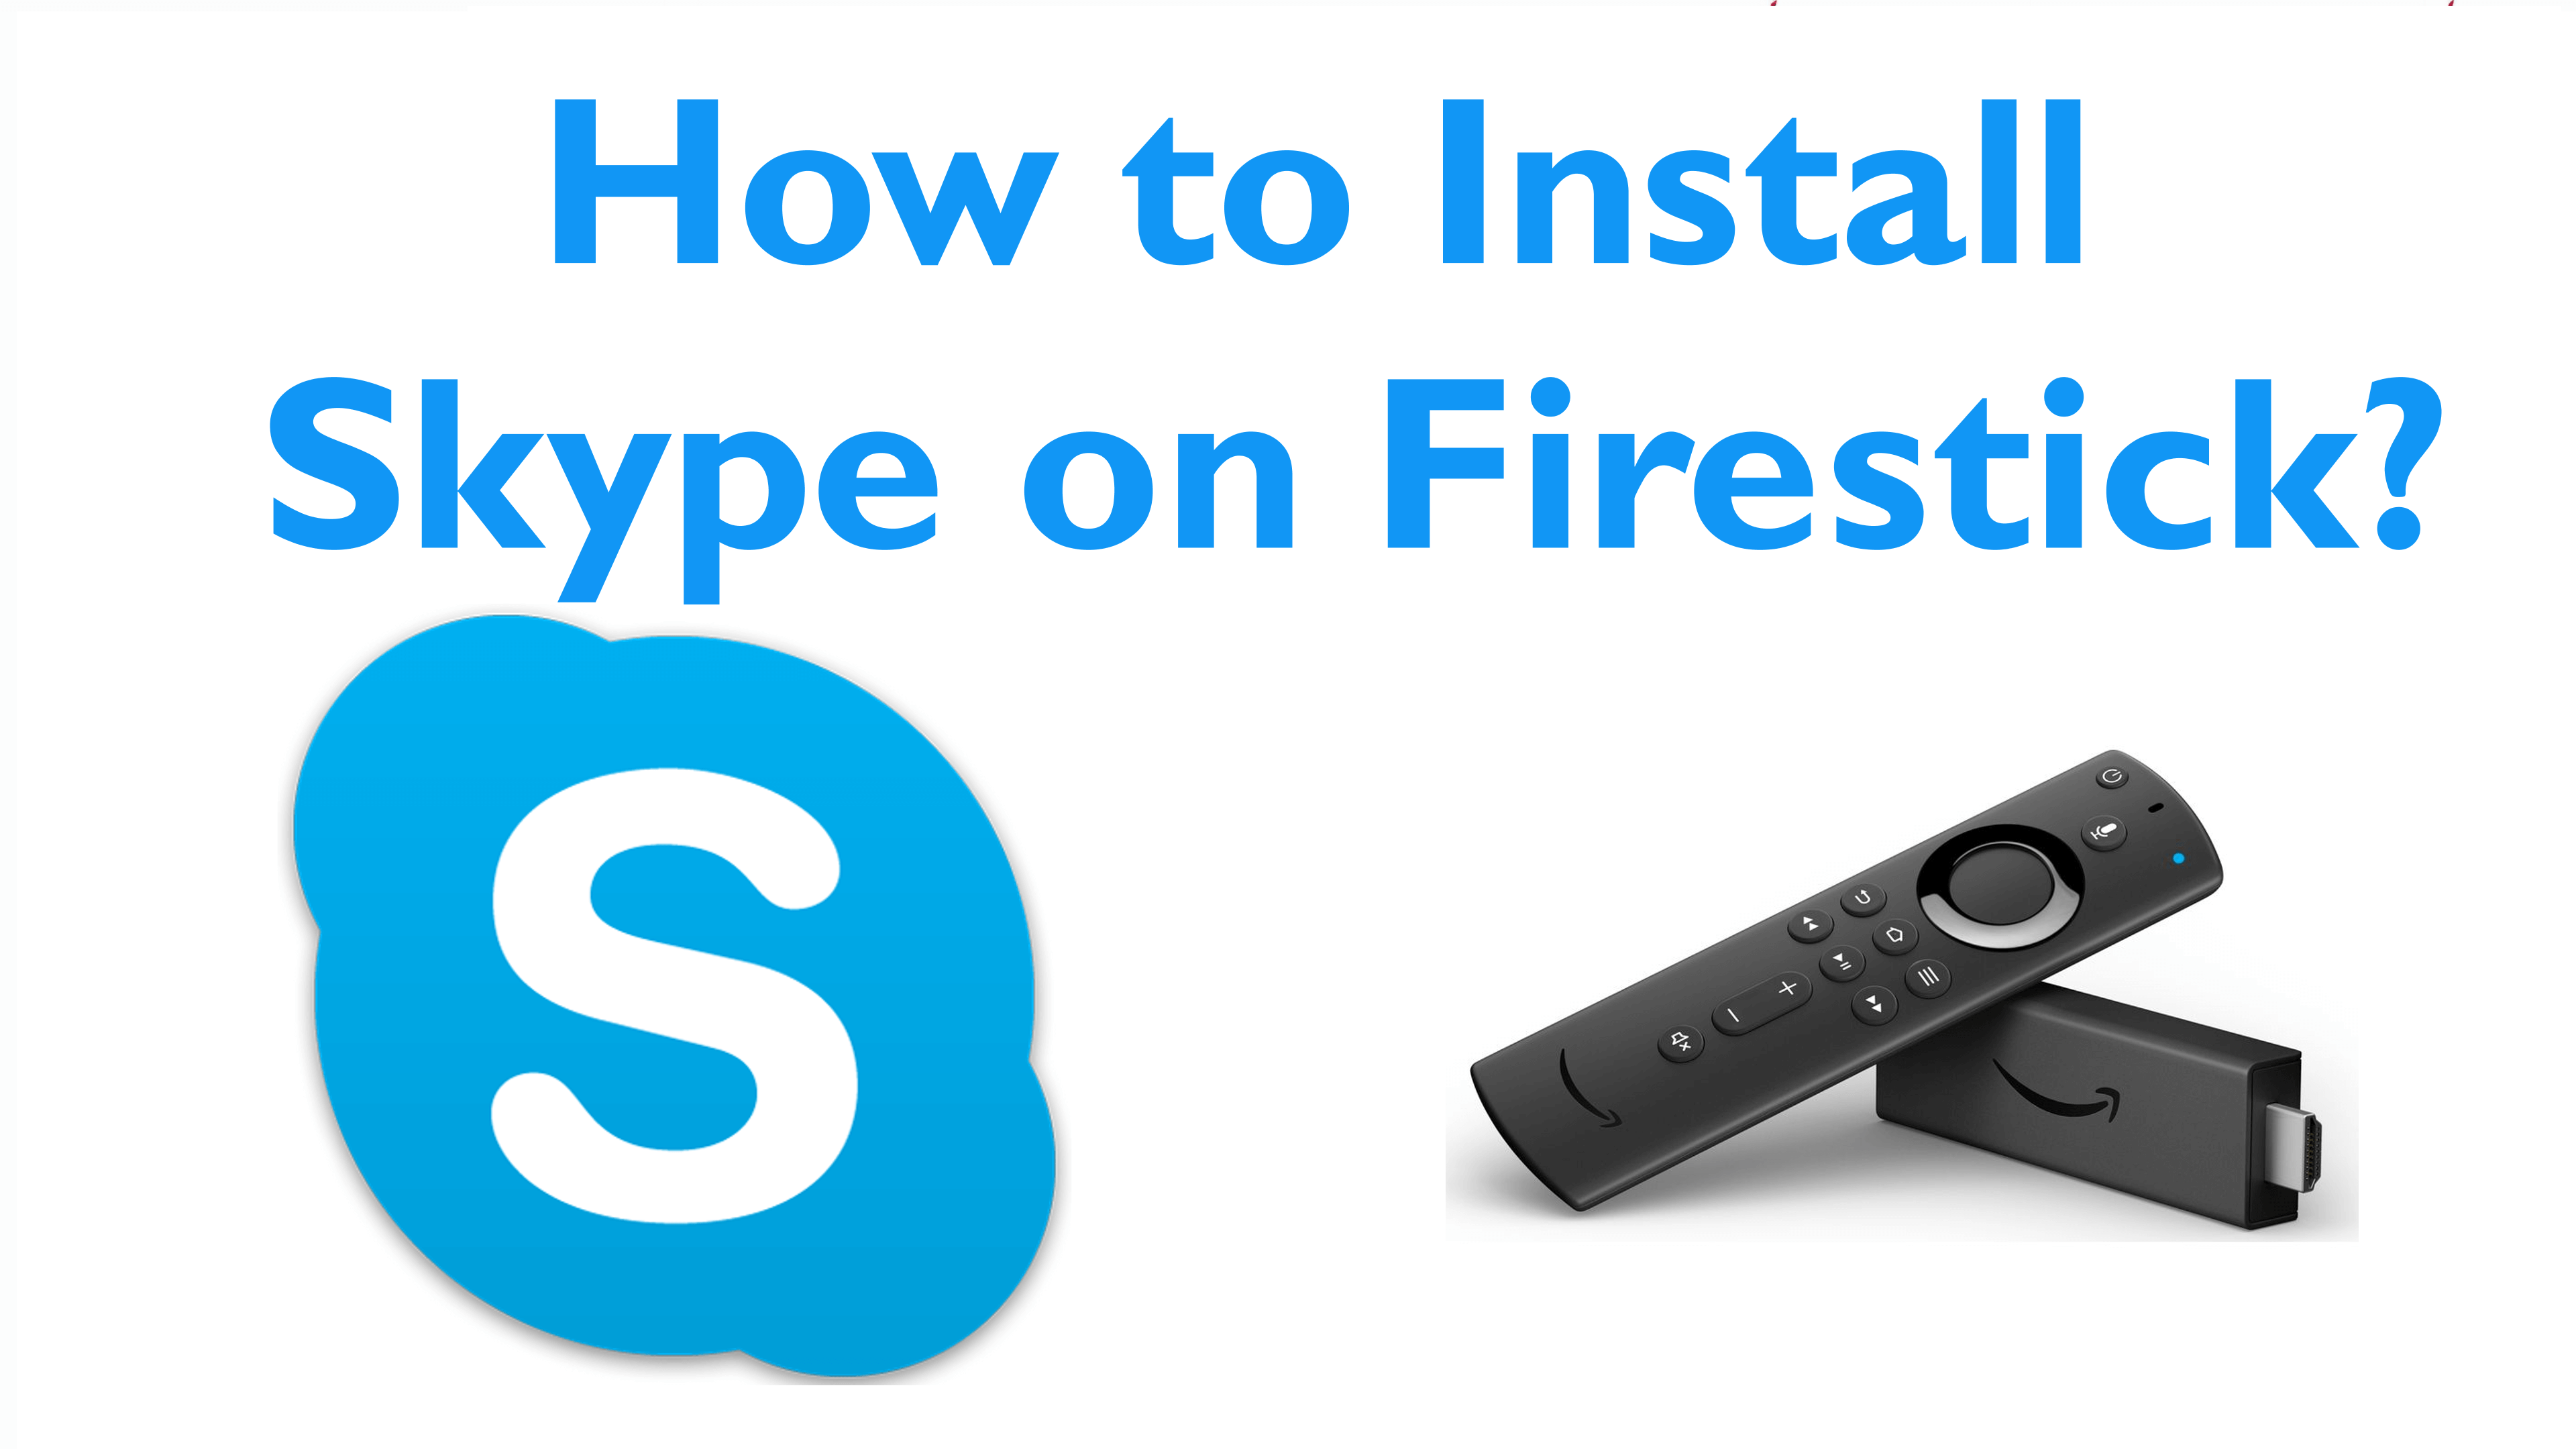 How to Install Skype on Firestick / Fire TV? - Firestick Apps Guide